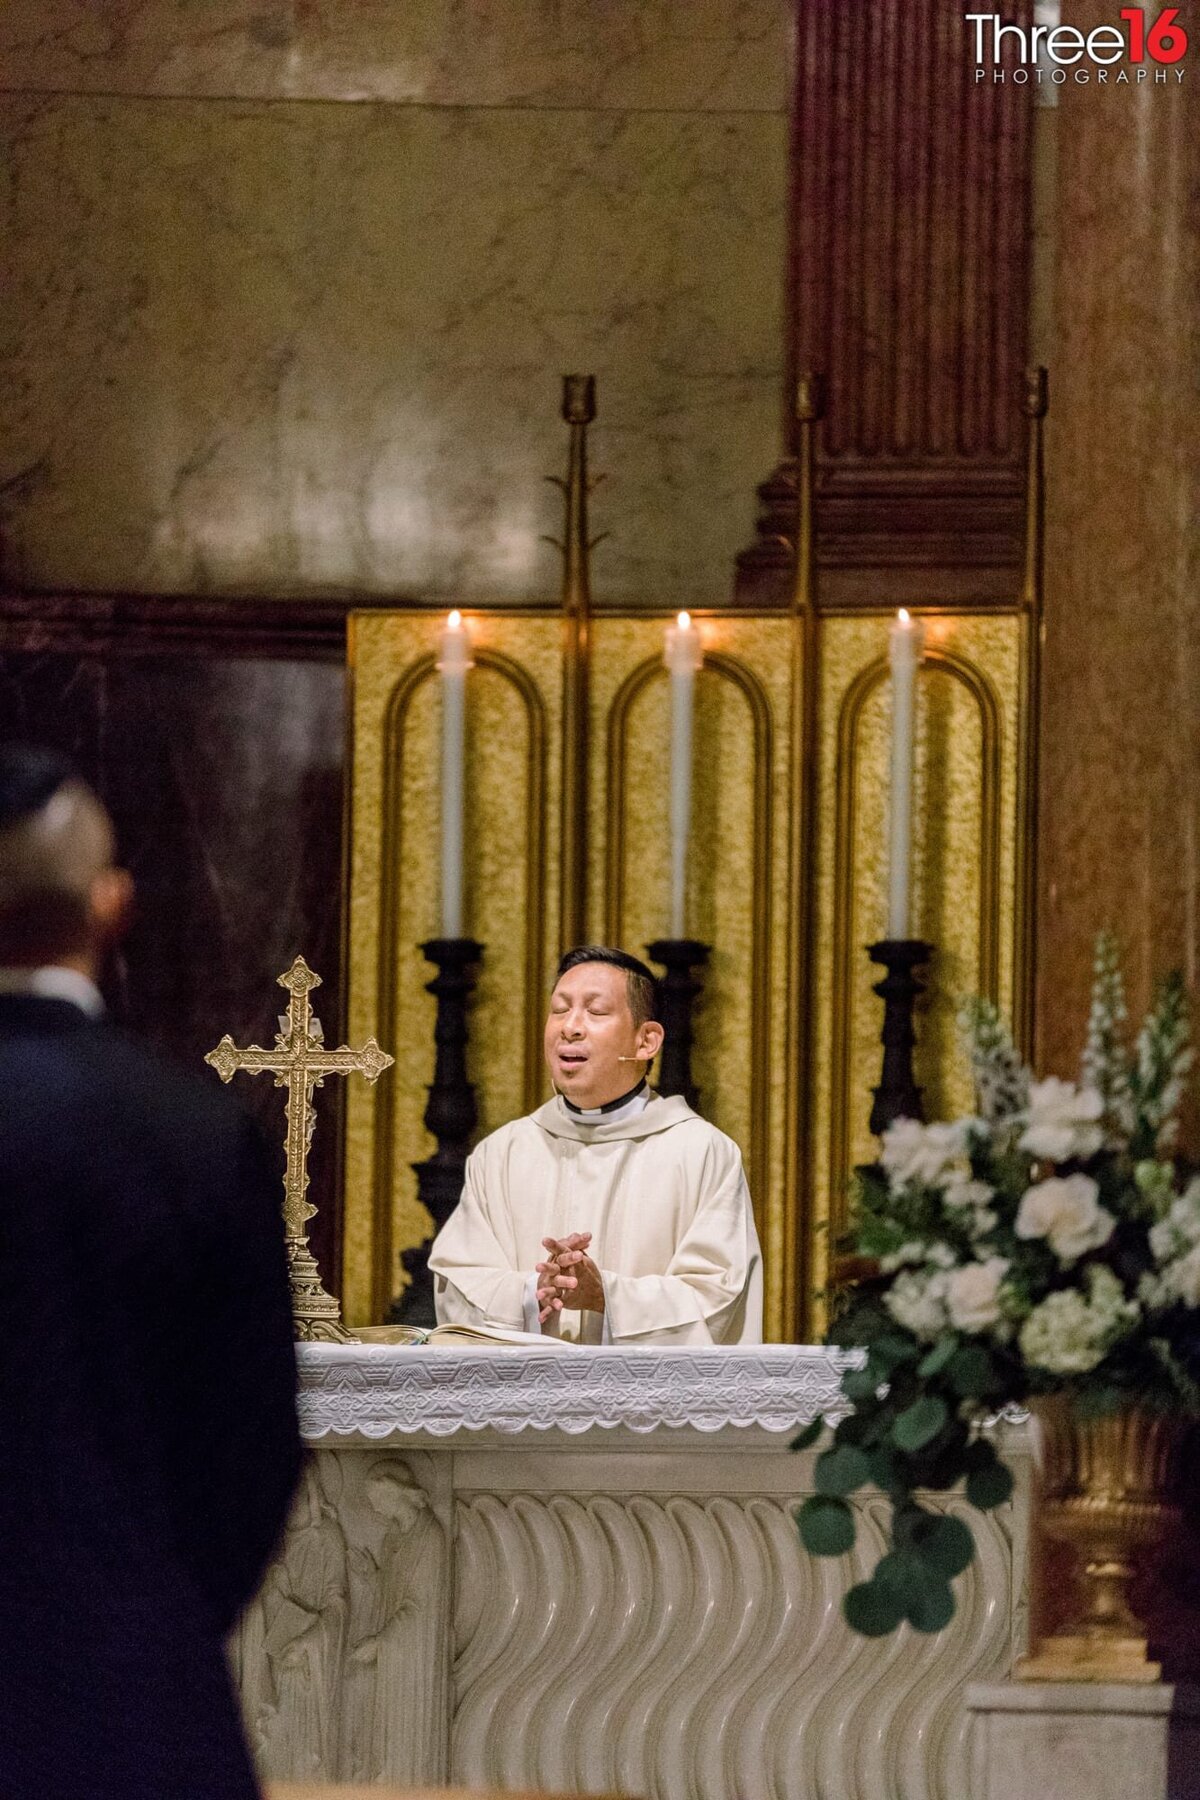 Priest performs a wedding ceremony